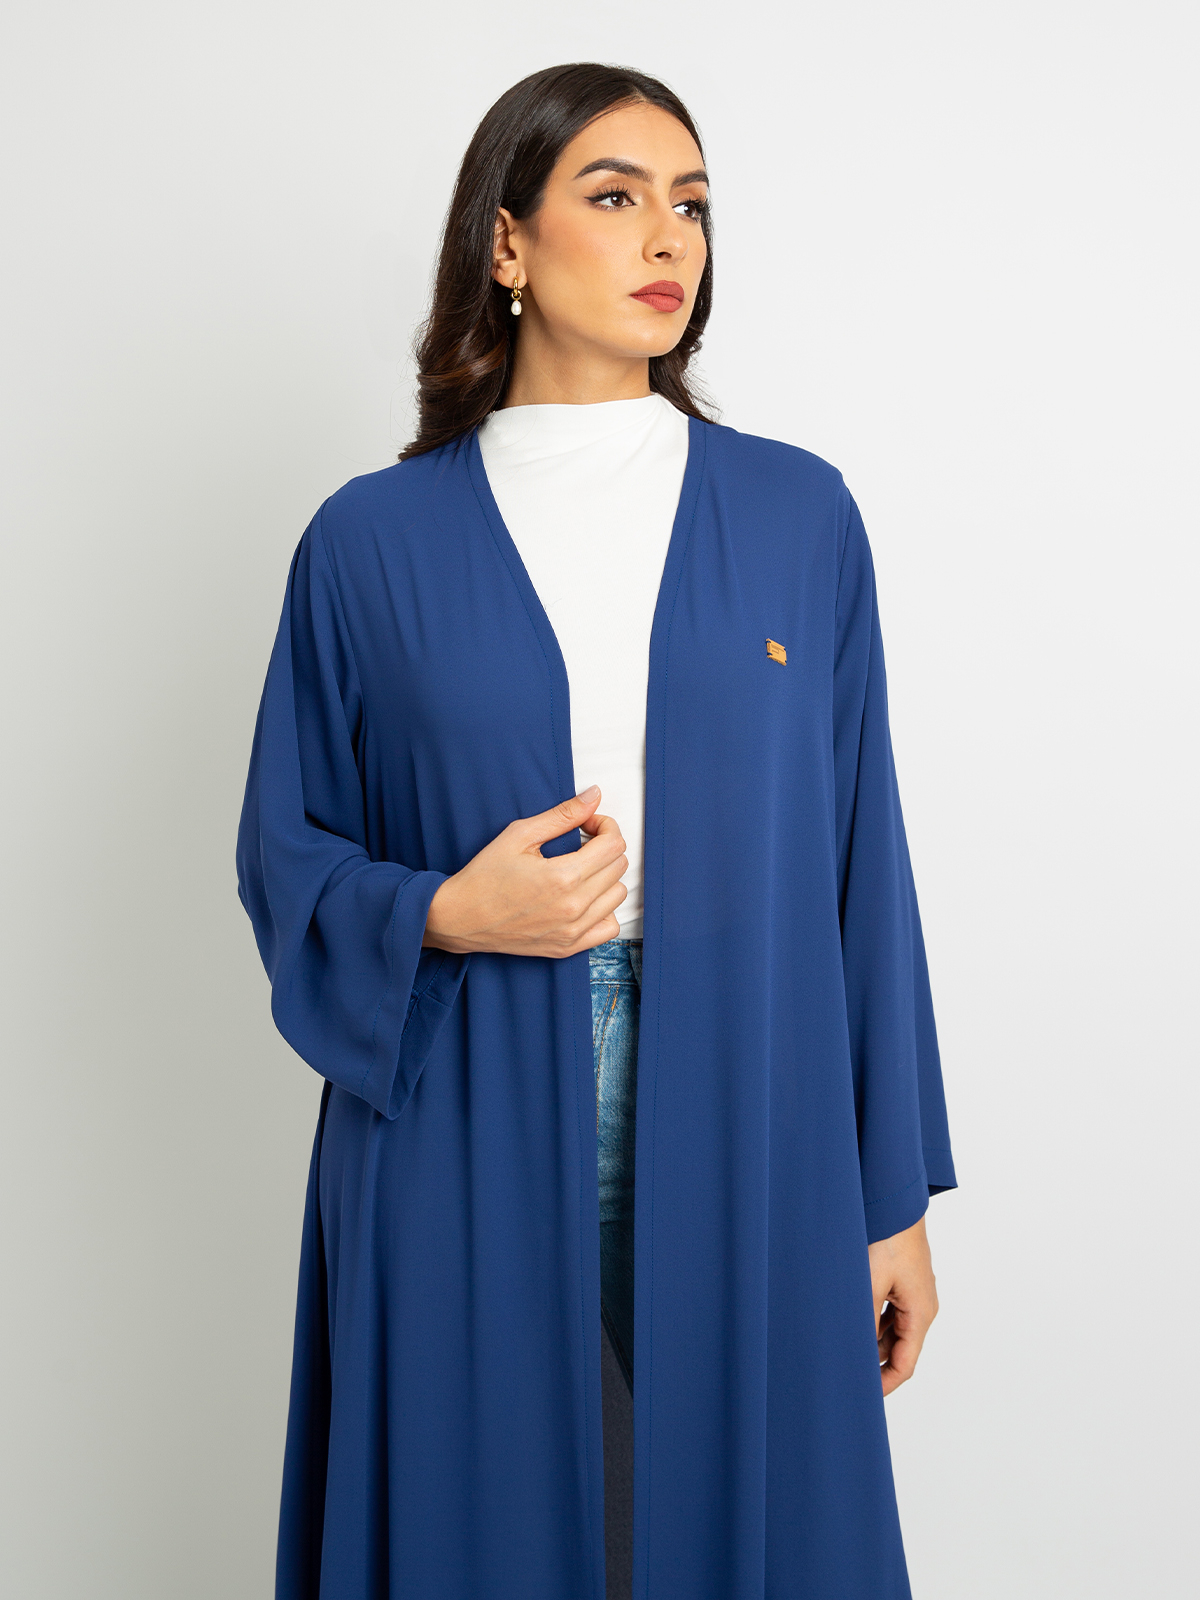 Dark Blue - A Cut Long Open Half Cloche Abaya in Light Fabric